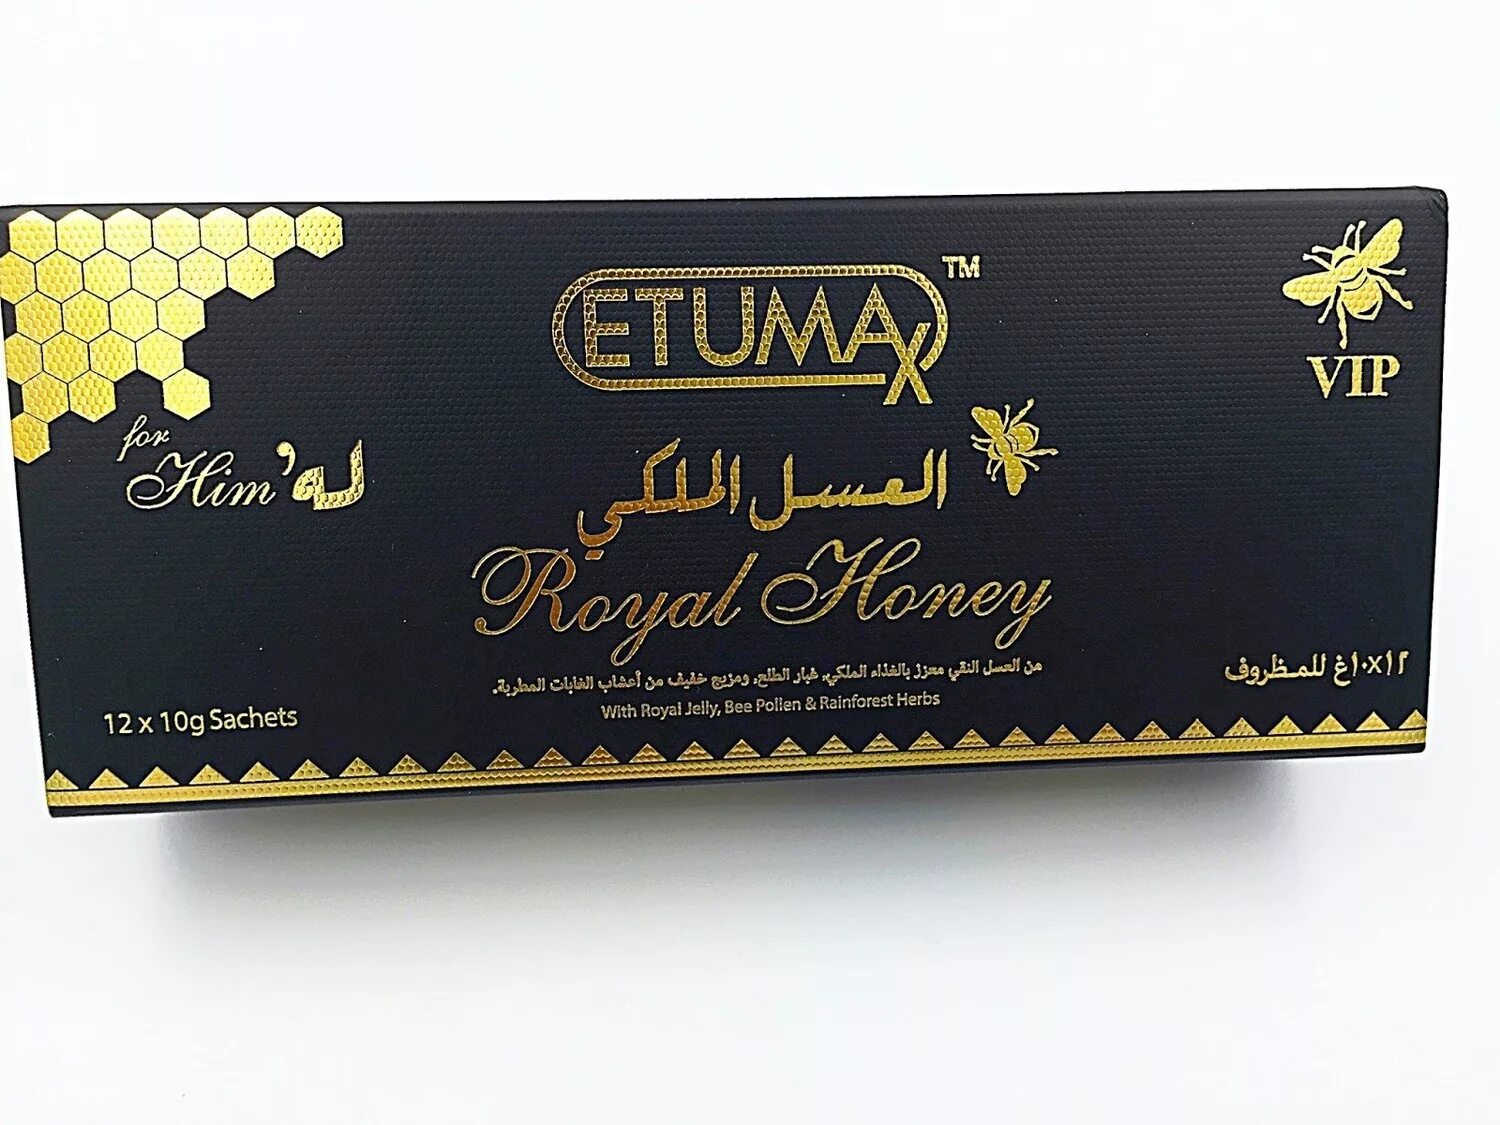 Королевский мед Royal Honey Etumax. Etumax Royal Honey для мужчин. VIP Etumax Royal Honey. Etumax Royal Honey золотые. Royal honey